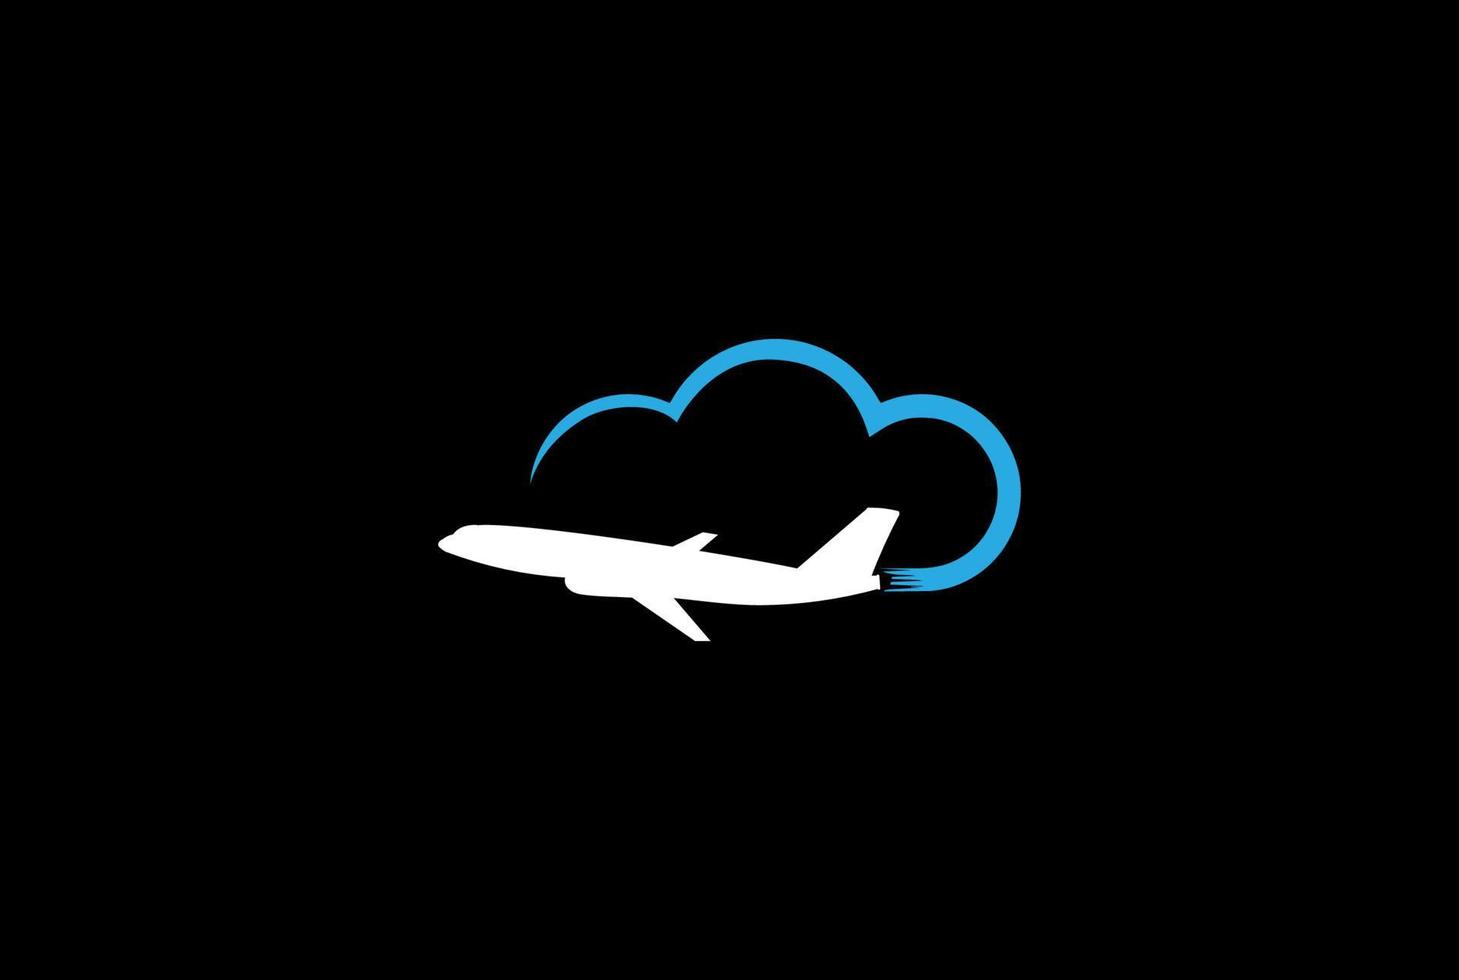 Simple Minimalist Cloud Plane for Travel Technology Logo Design Vector